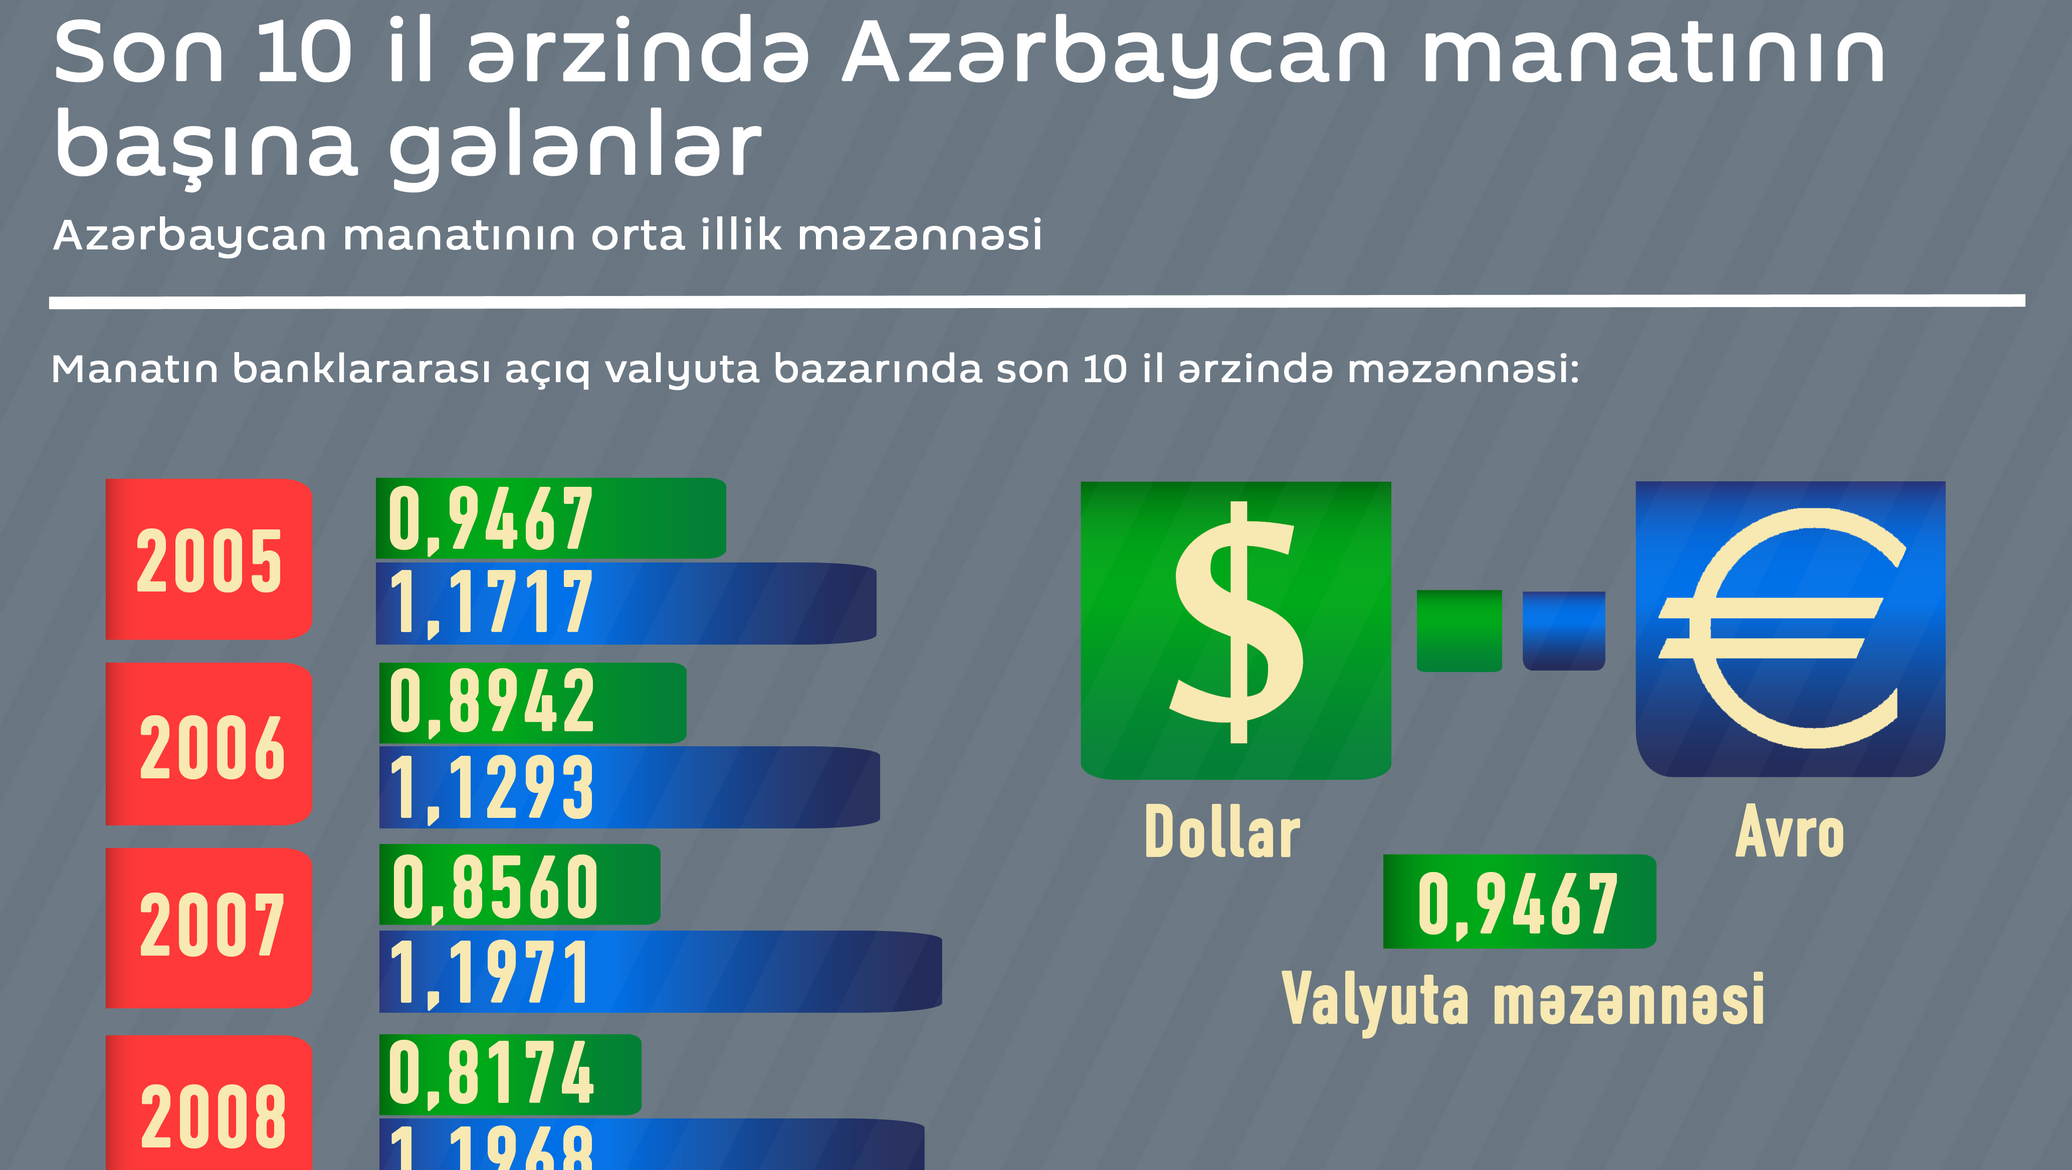 Курс евро в азербайджане на сегодня. Курсы валют в Азербайджане. Курс рубля в Азербайджане. Курс рубля в Азербайджане на сегодня. Курс валют в Азербайджане манат.